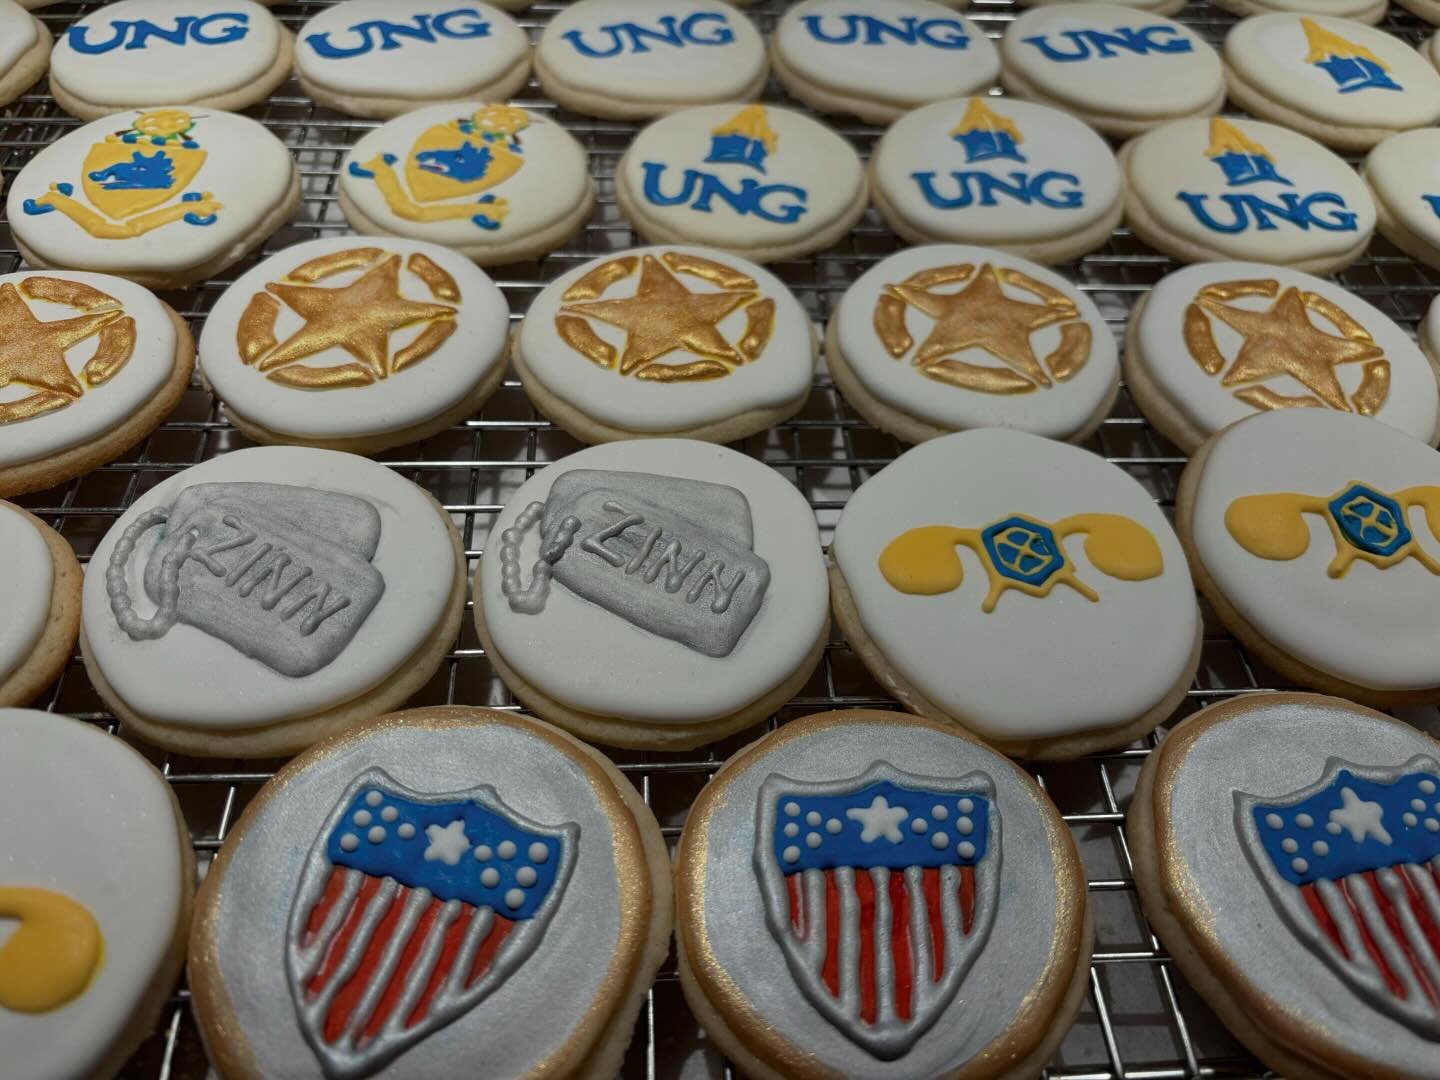 UNG graduation cookies 
.
.
.
.
.
.
.
.
.
#ung #universityofnorthgeorgia #army #graduation #cookies #customdecoratedsugarcookies #artfulcakerybyjulie #flowerybranch #custombakery